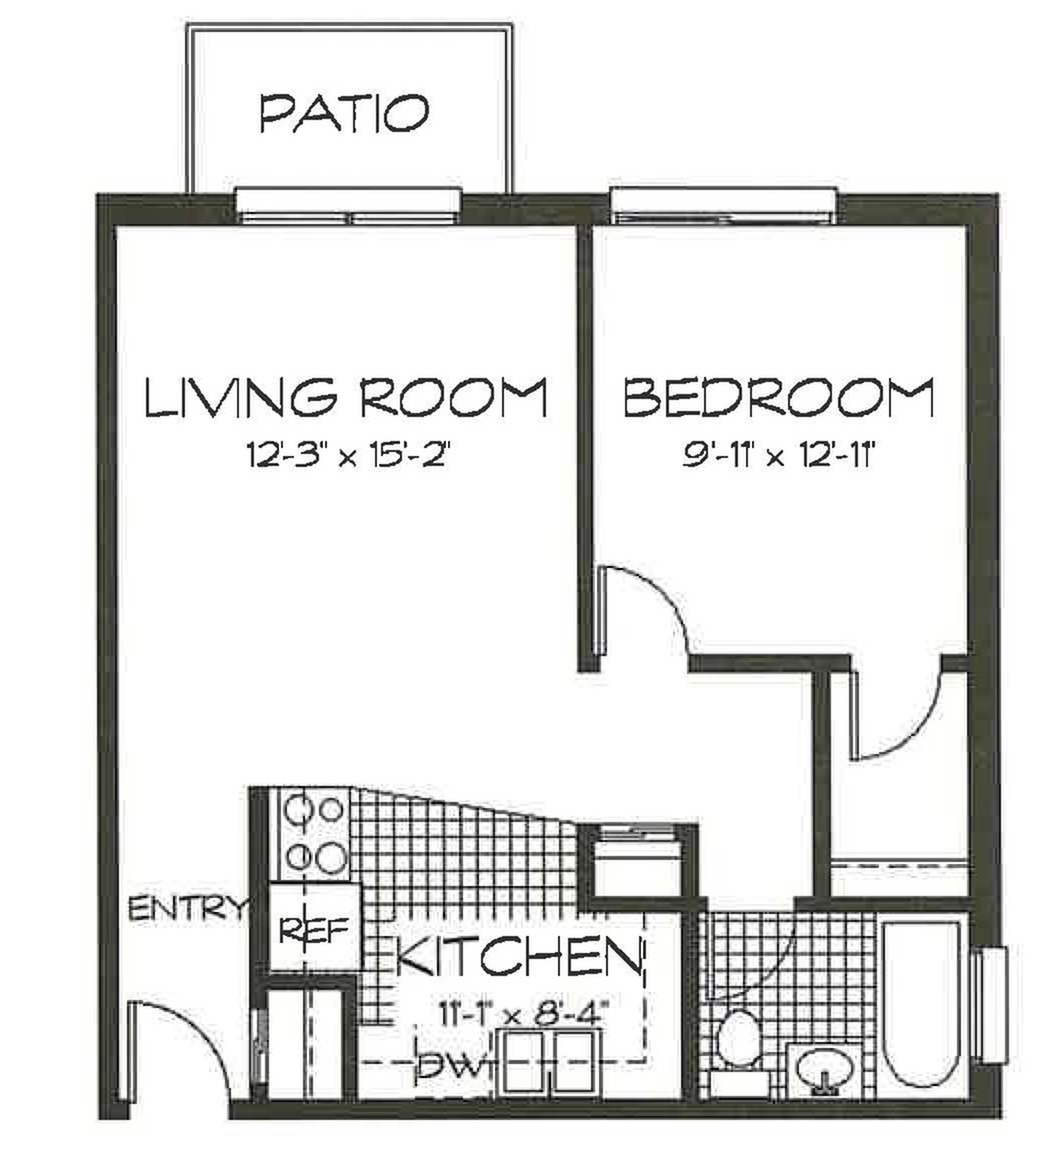 1 Bedroom, 1 Bath (535 sqft.)